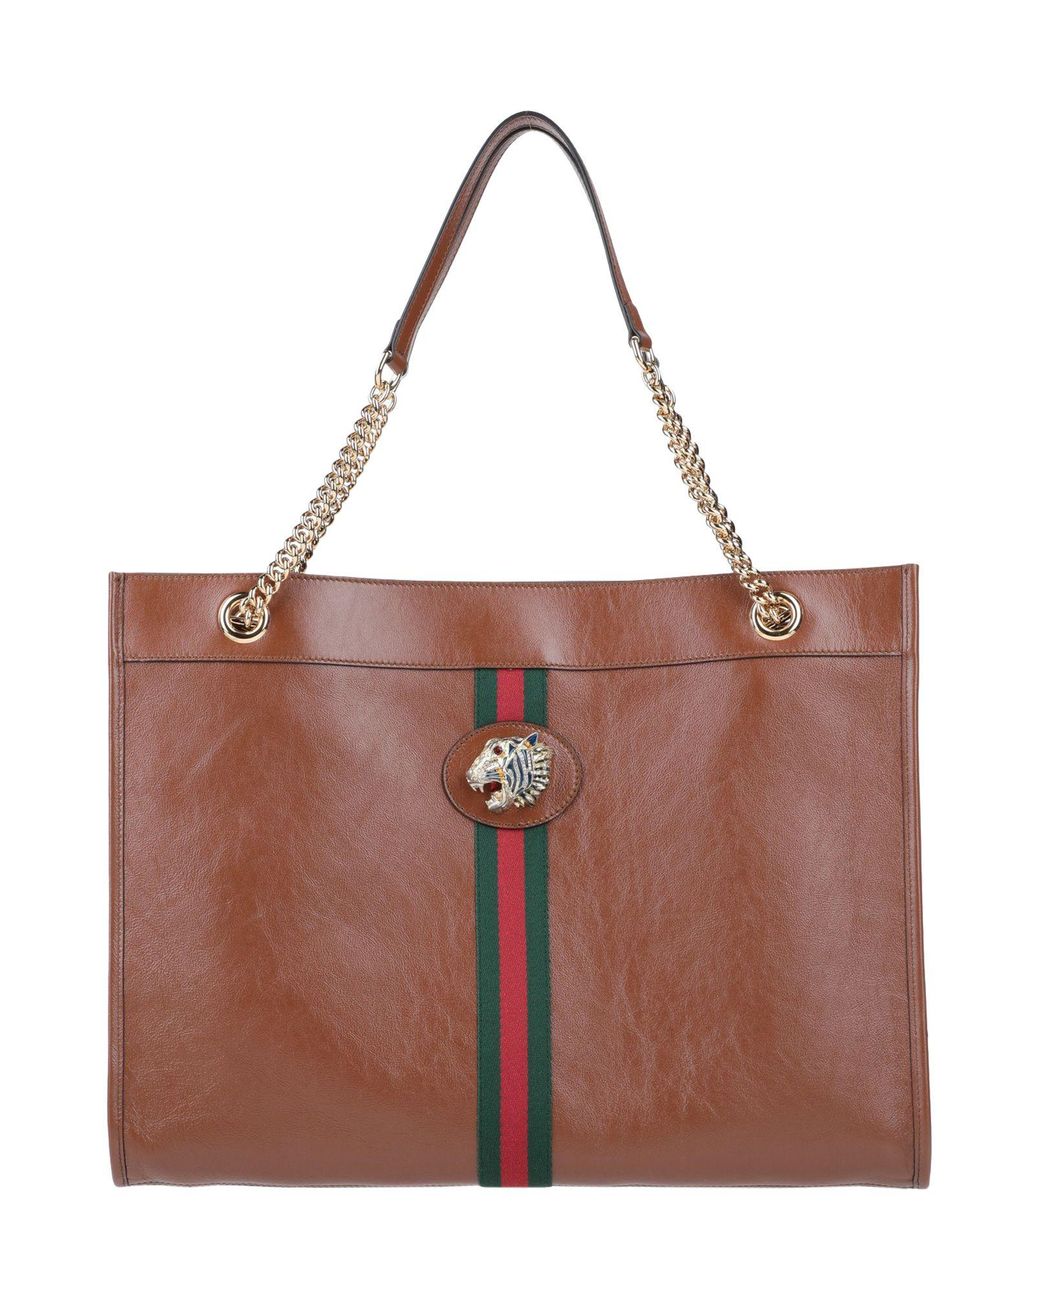 Gucci Rajah Large Leather Tote Shoulder Bag for Women